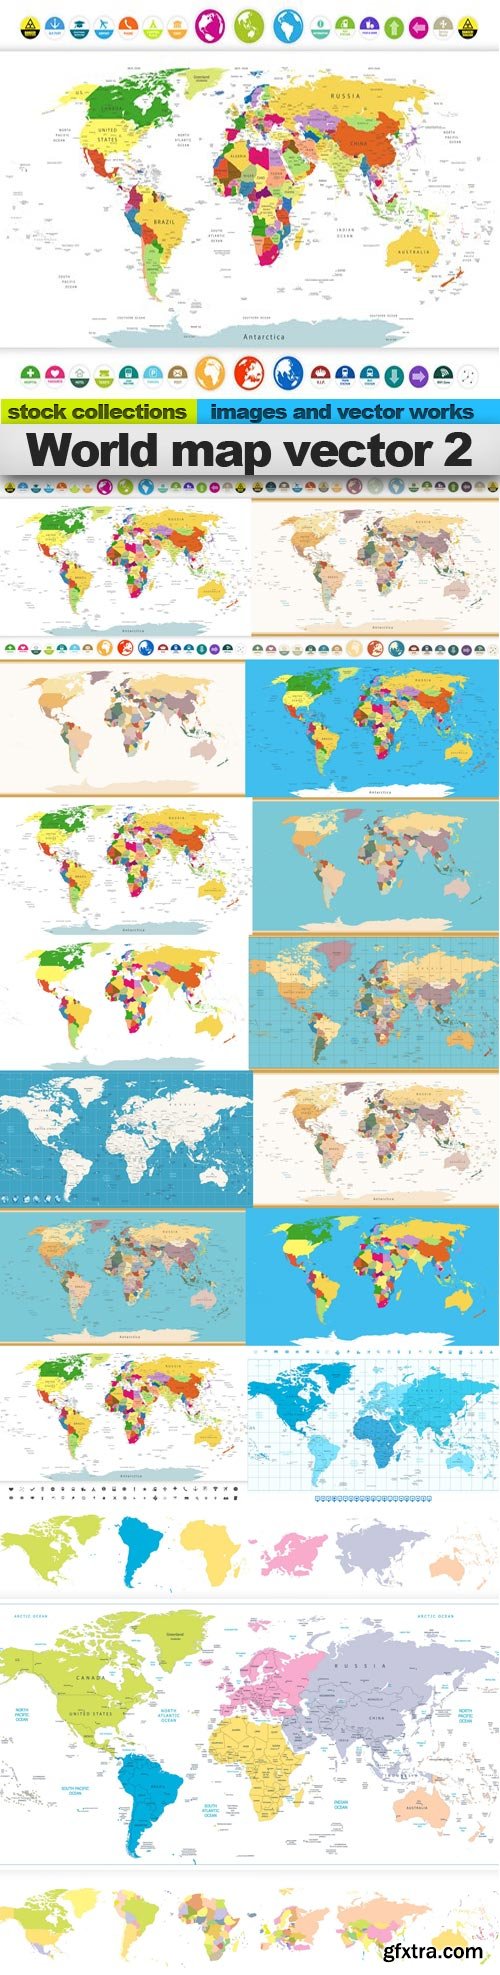 World map vector 2, 15 x EPS